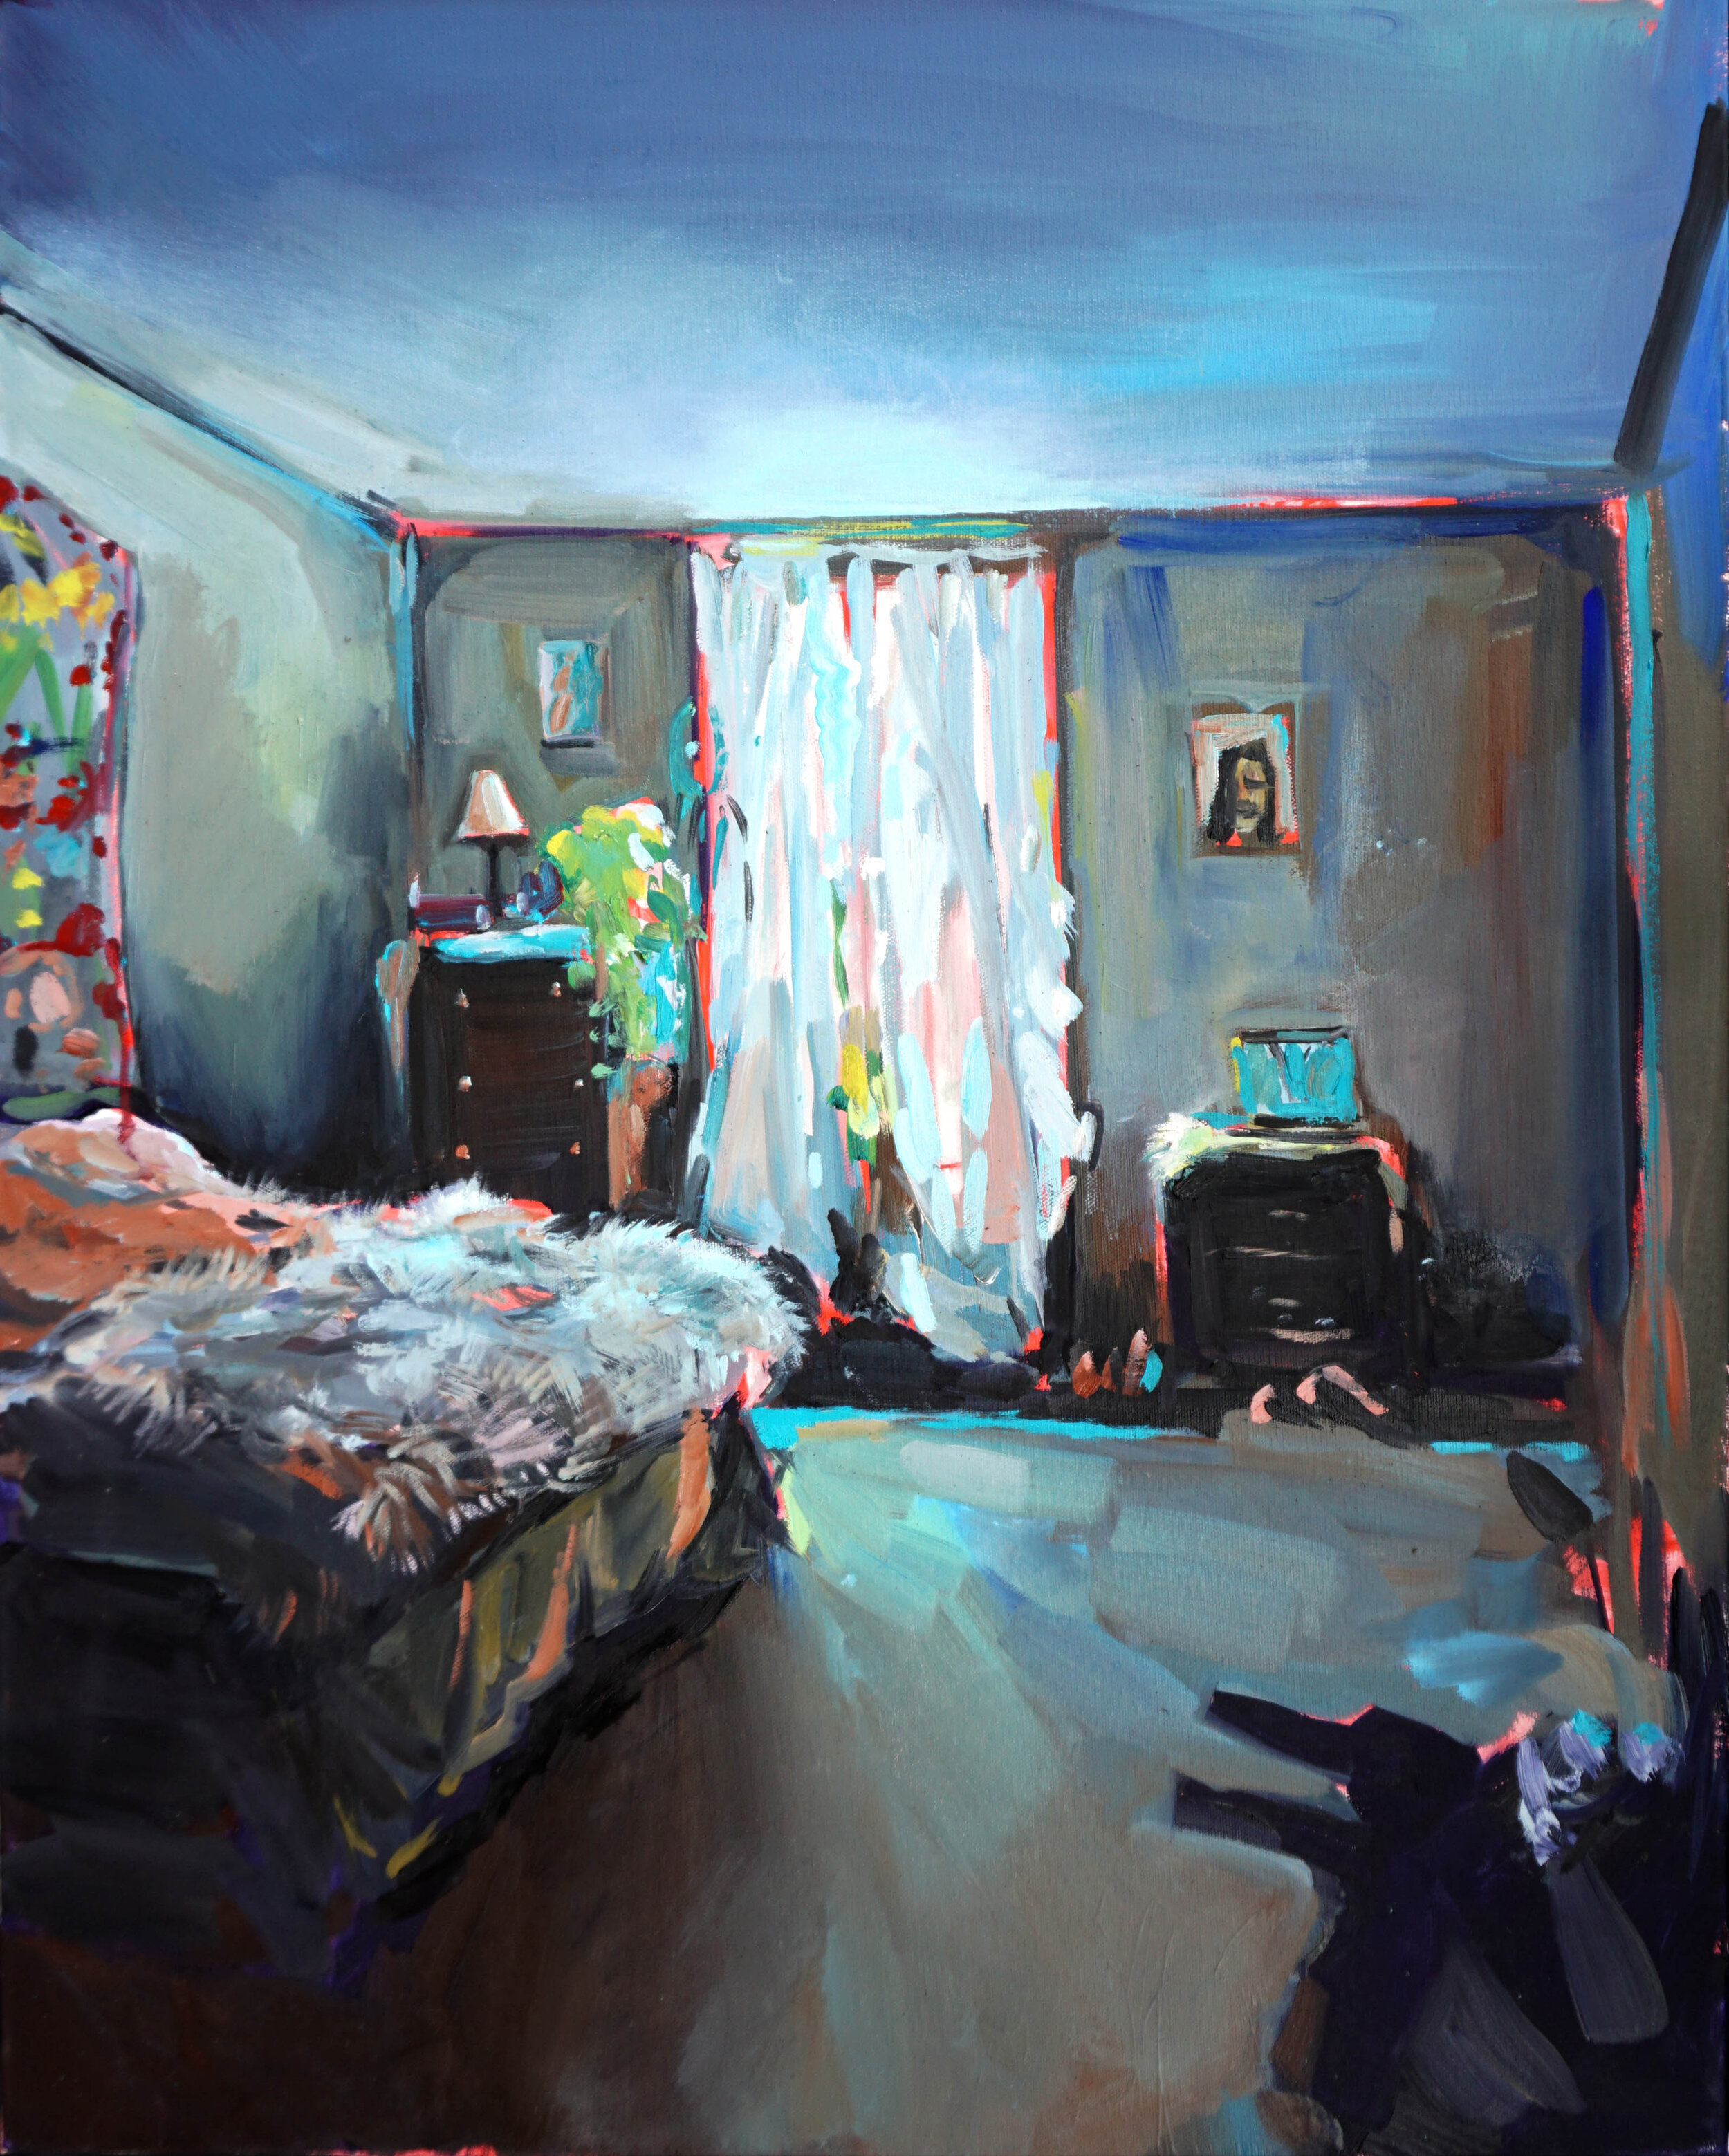  Ekaterina Popova  - Mood -  2020, Oil on canvas - 30 x 24 x 2 inches / 76 x 61 x 5 cm 